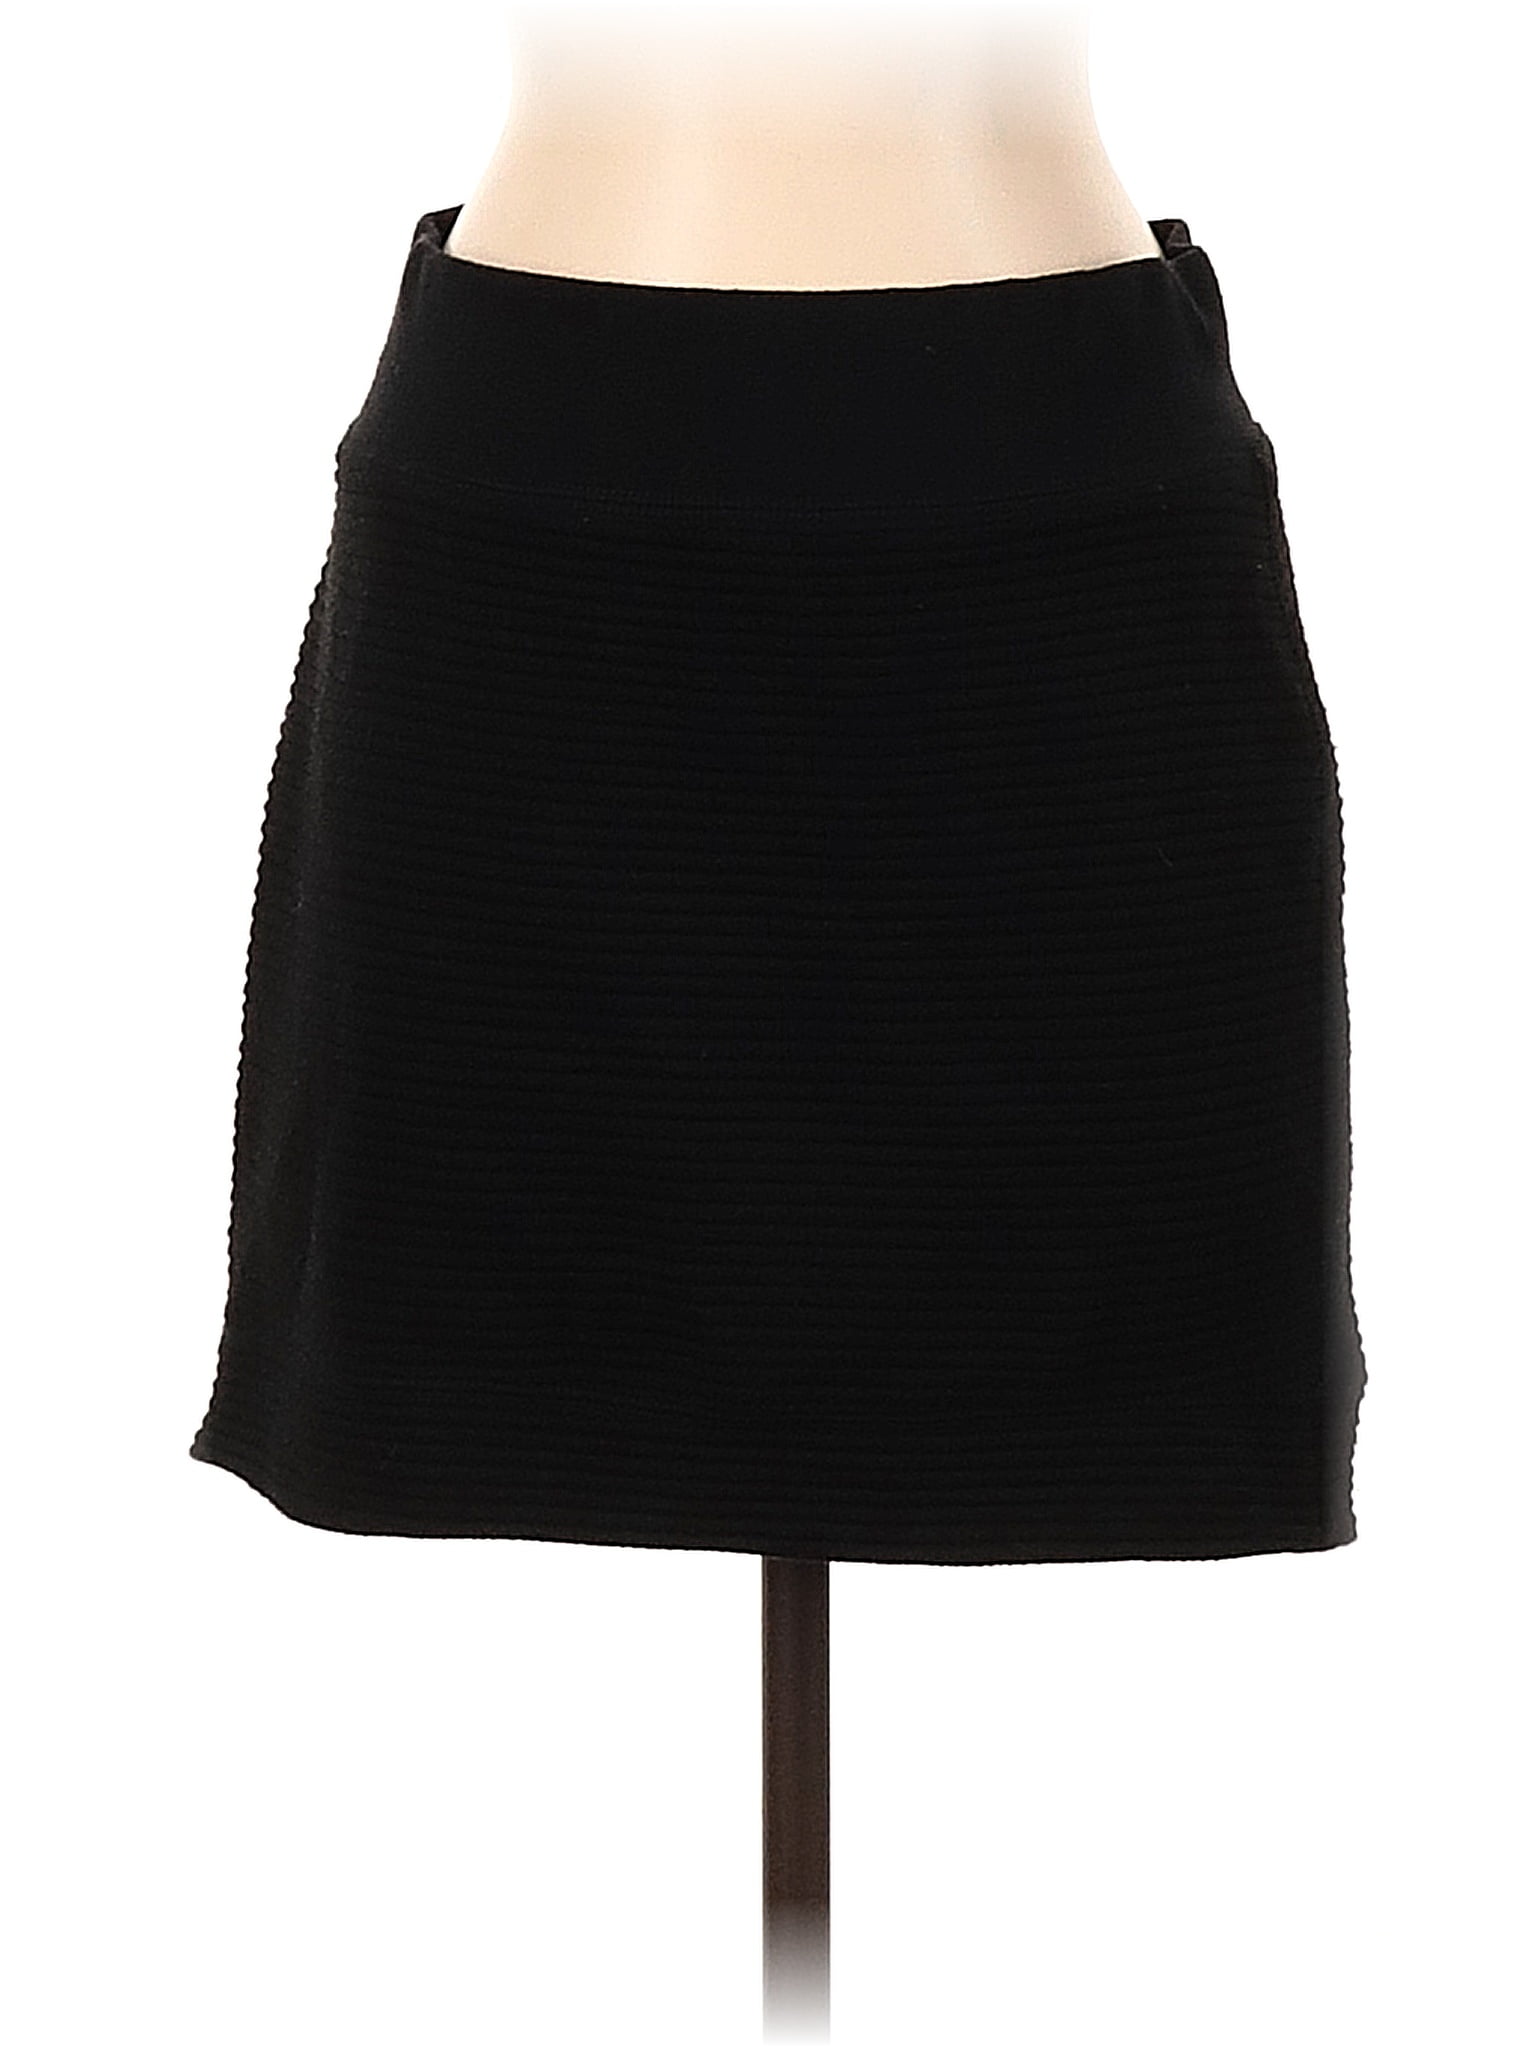 Rag & Bone Solid Ivory Black Casual Skirt Size S - 88% off | thredUP